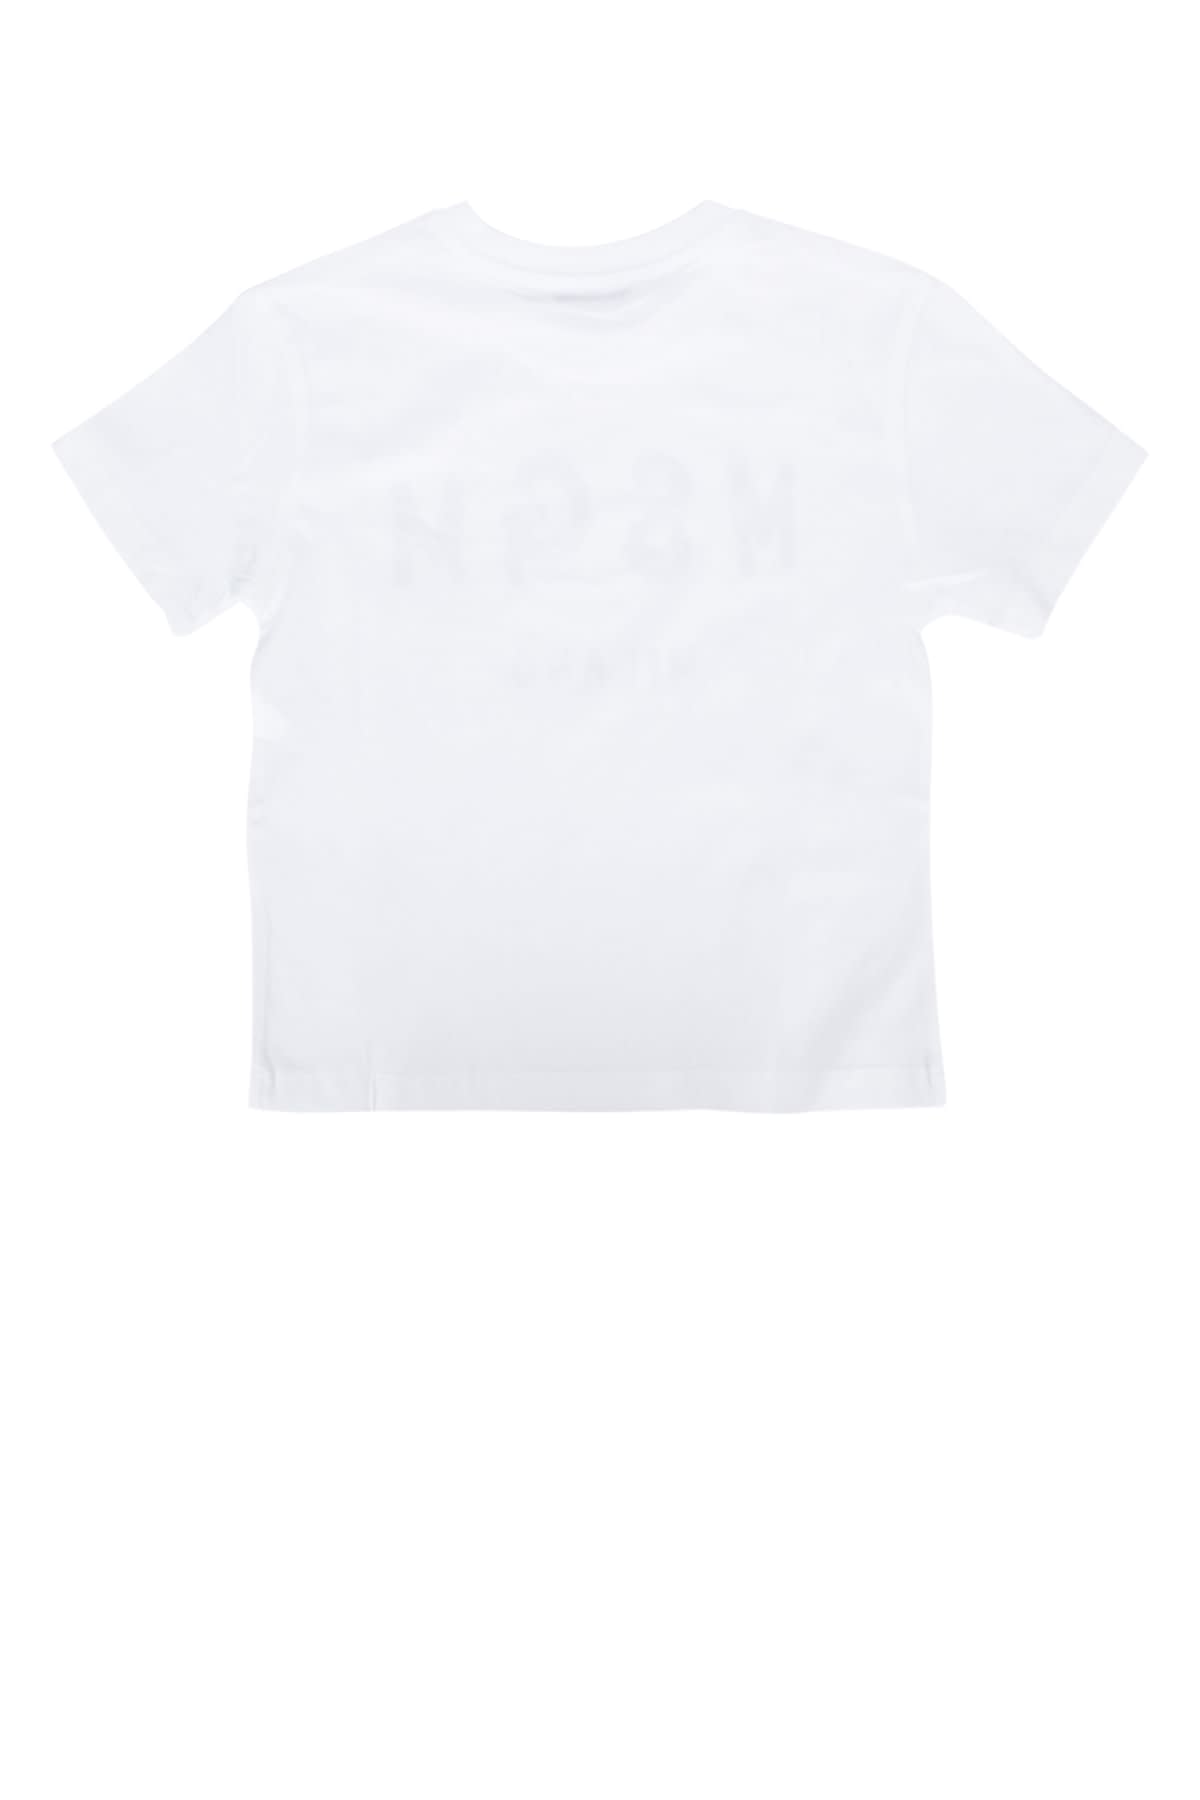 Msgm Kids' T-shirt In Biancowhite